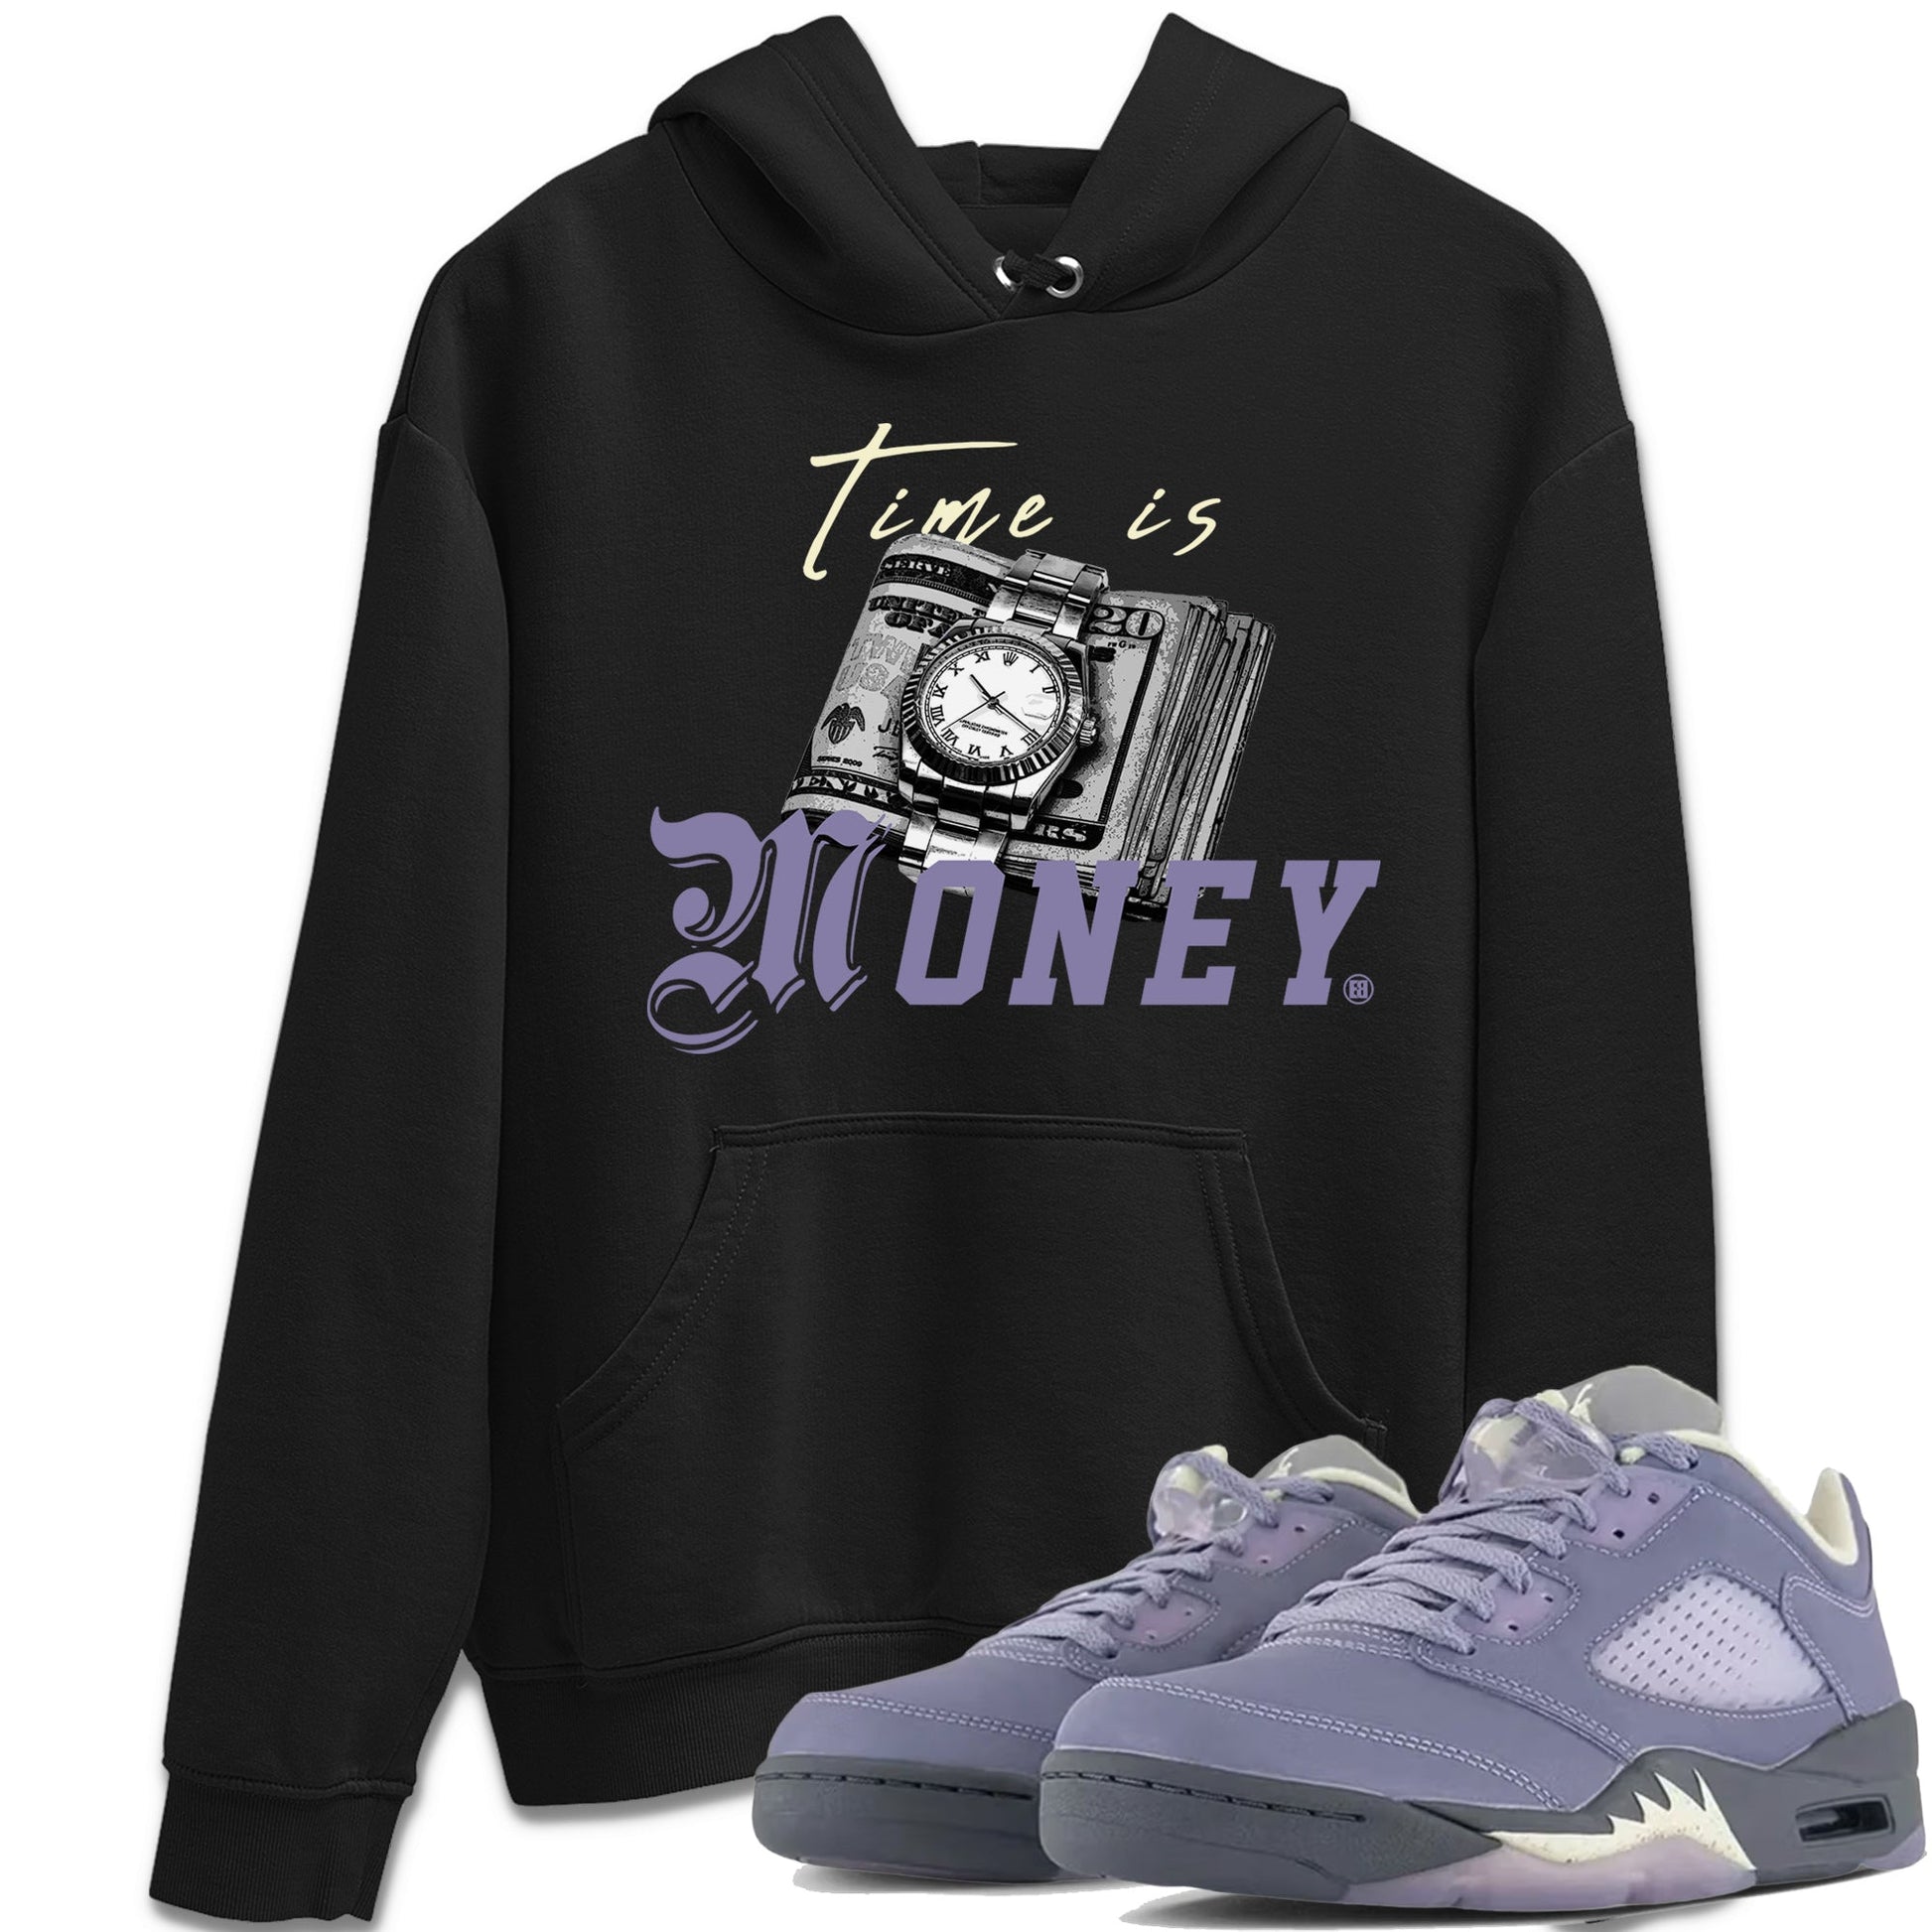 5s Indigo Haze Sneaker Match Tees Time Is Money Sneaker T-Shirt Air Jordan 5 Indigo Haze Sneaker Release Tees Unisex Shirts Black 1